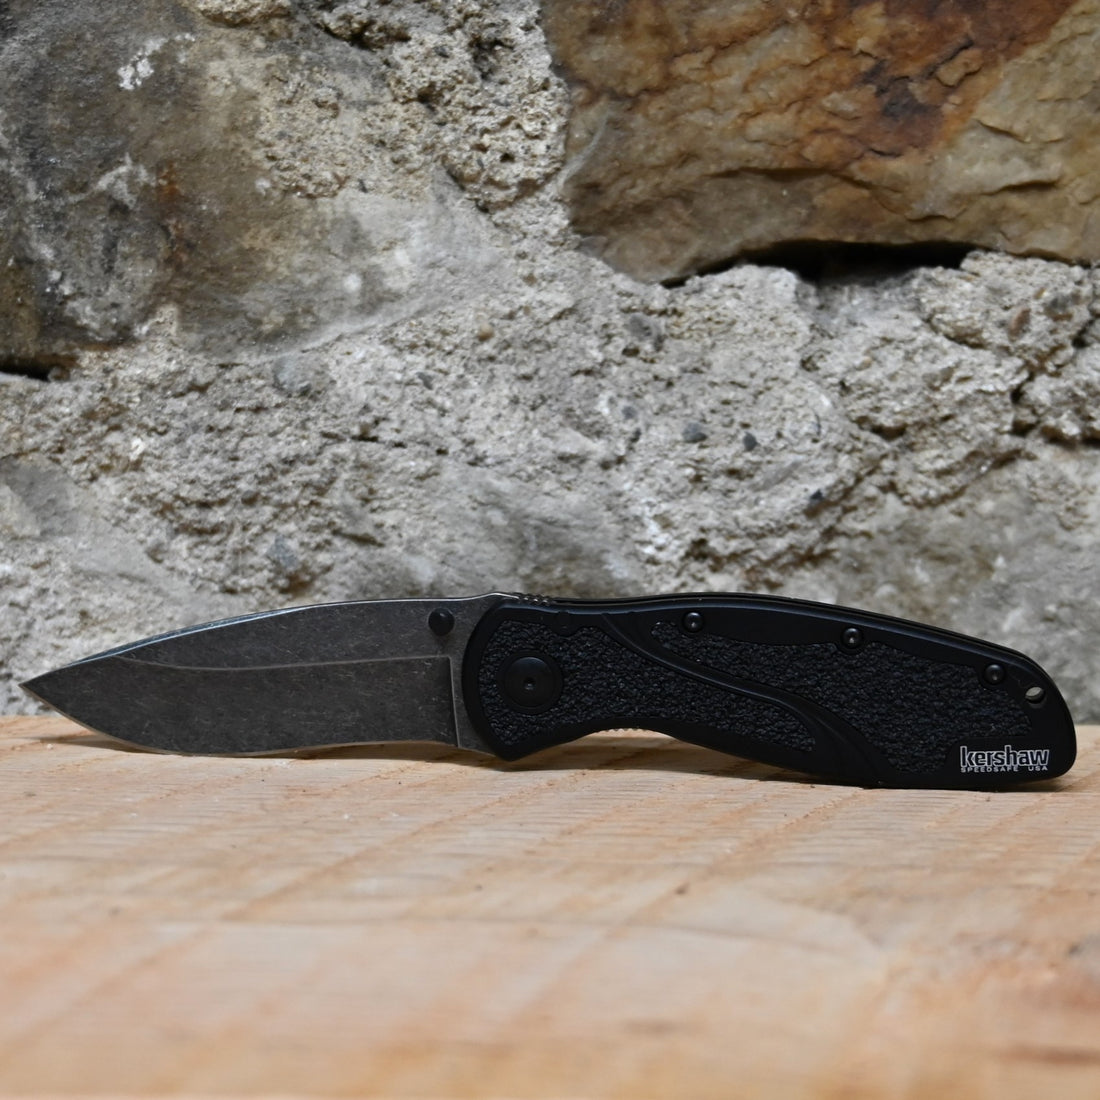 Kershaw Blur Knife in Aluminum Black view of knife